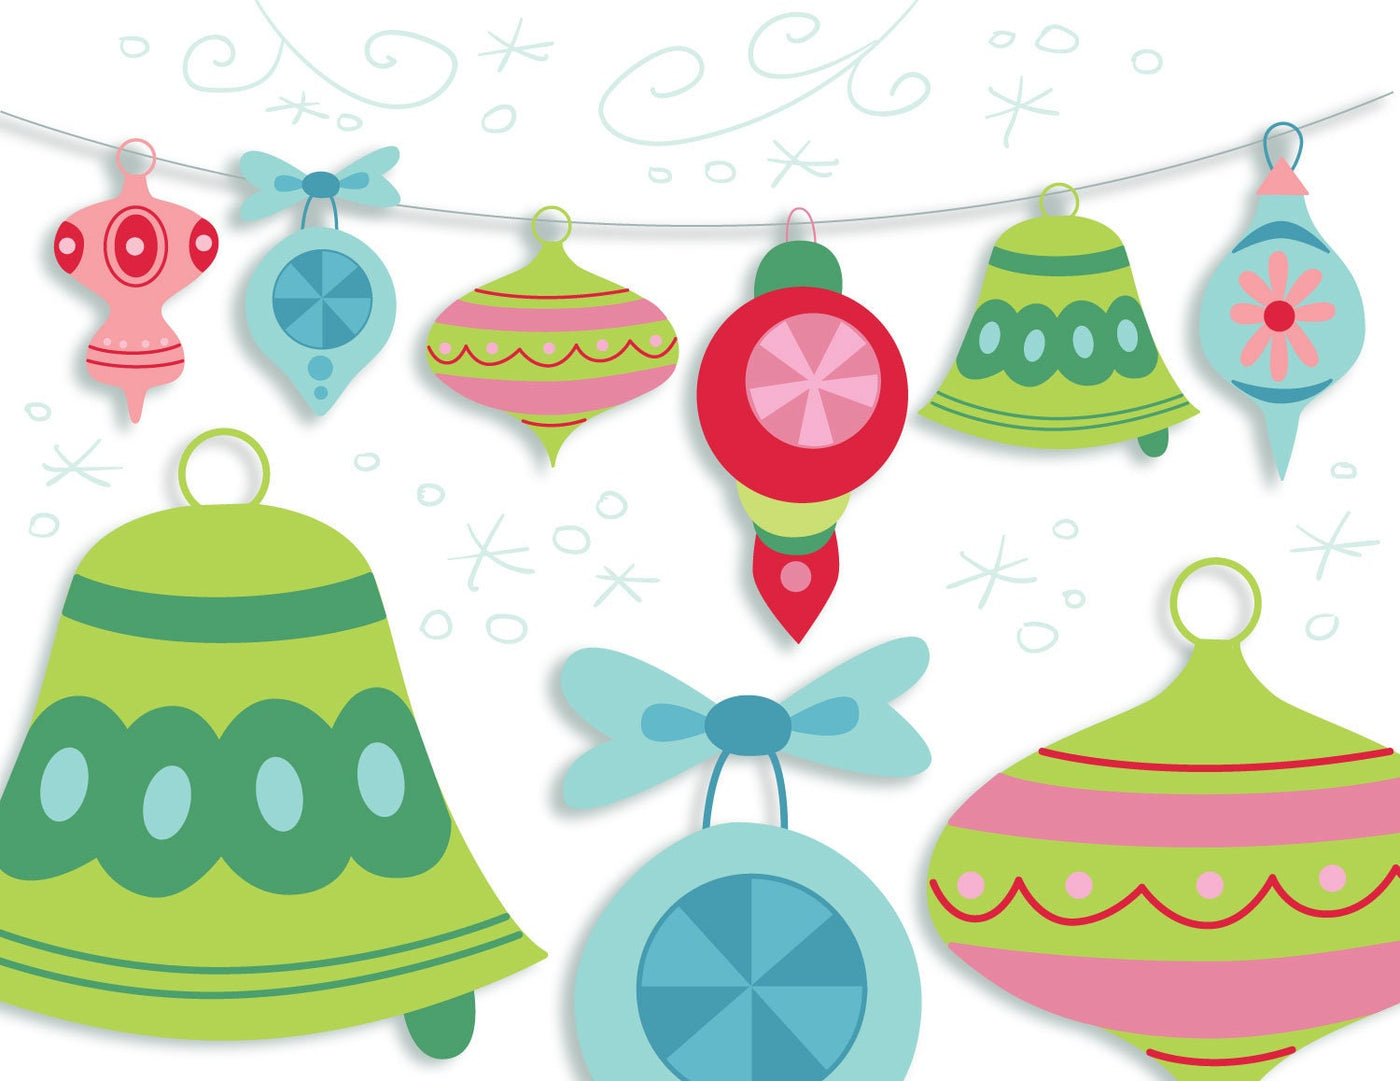 Vintage Christmas Tree Ornaments Printable SVG